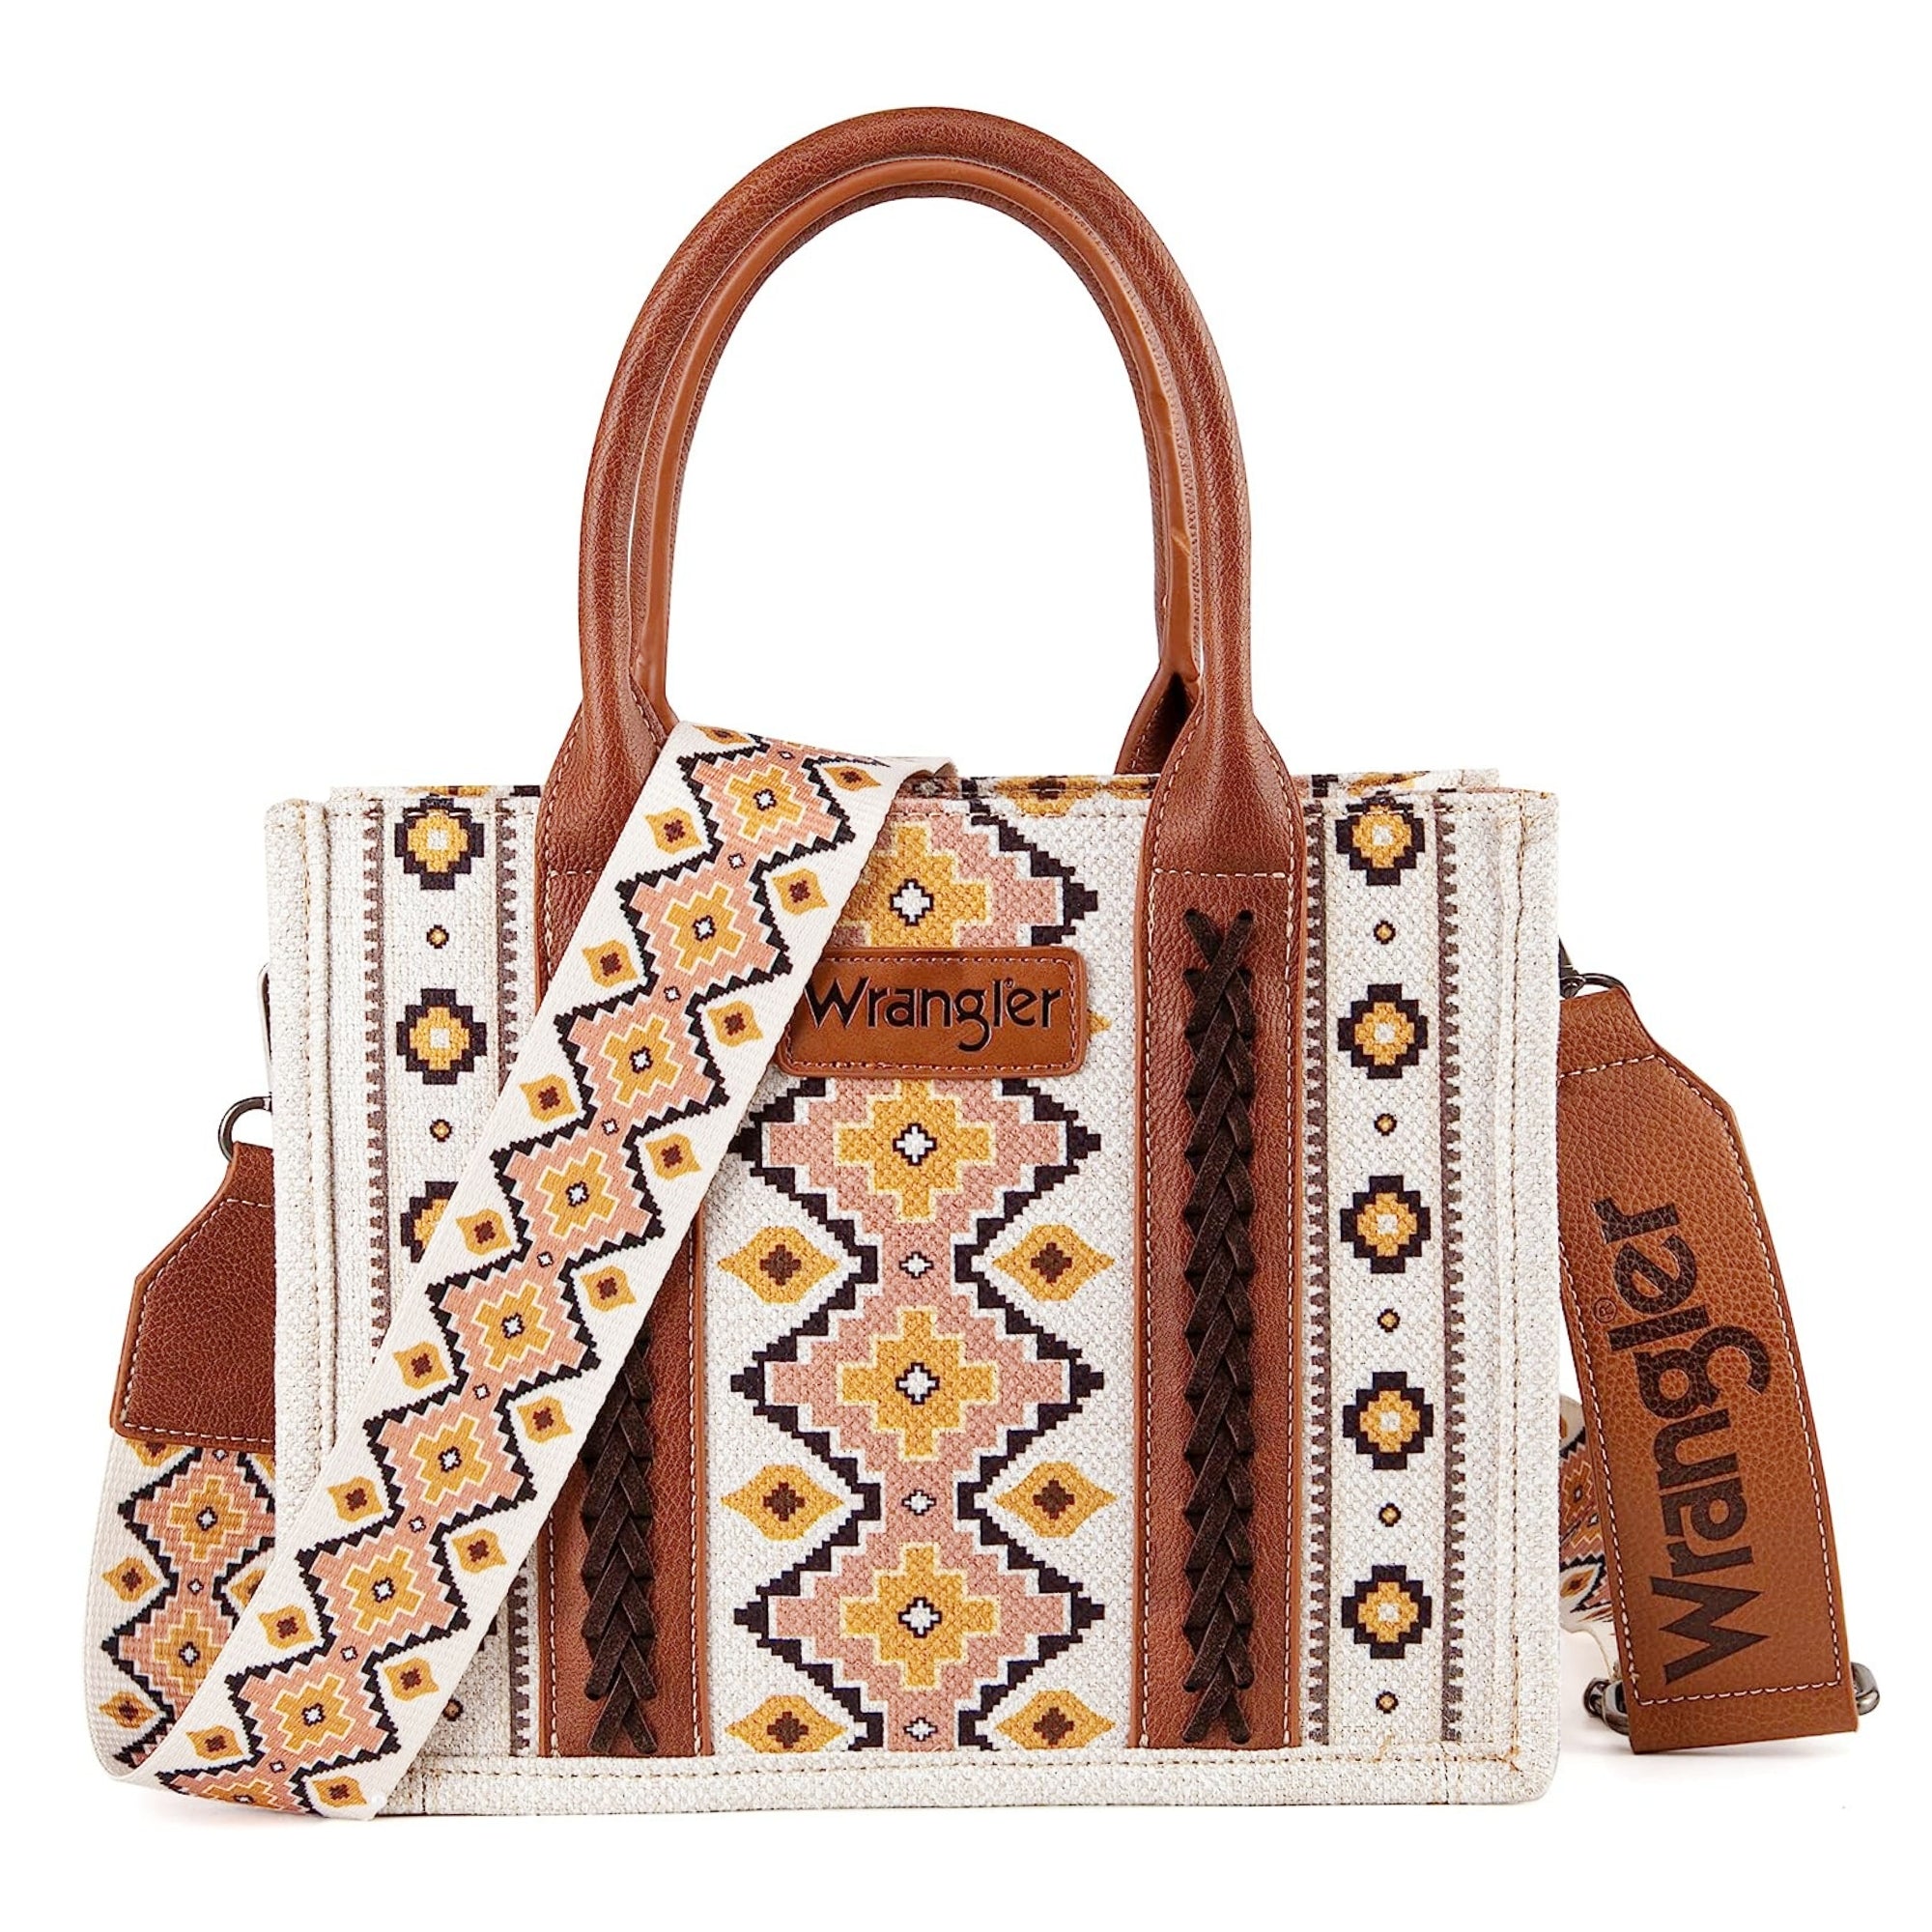 Twin / double leather tassels for designer handbags in beige